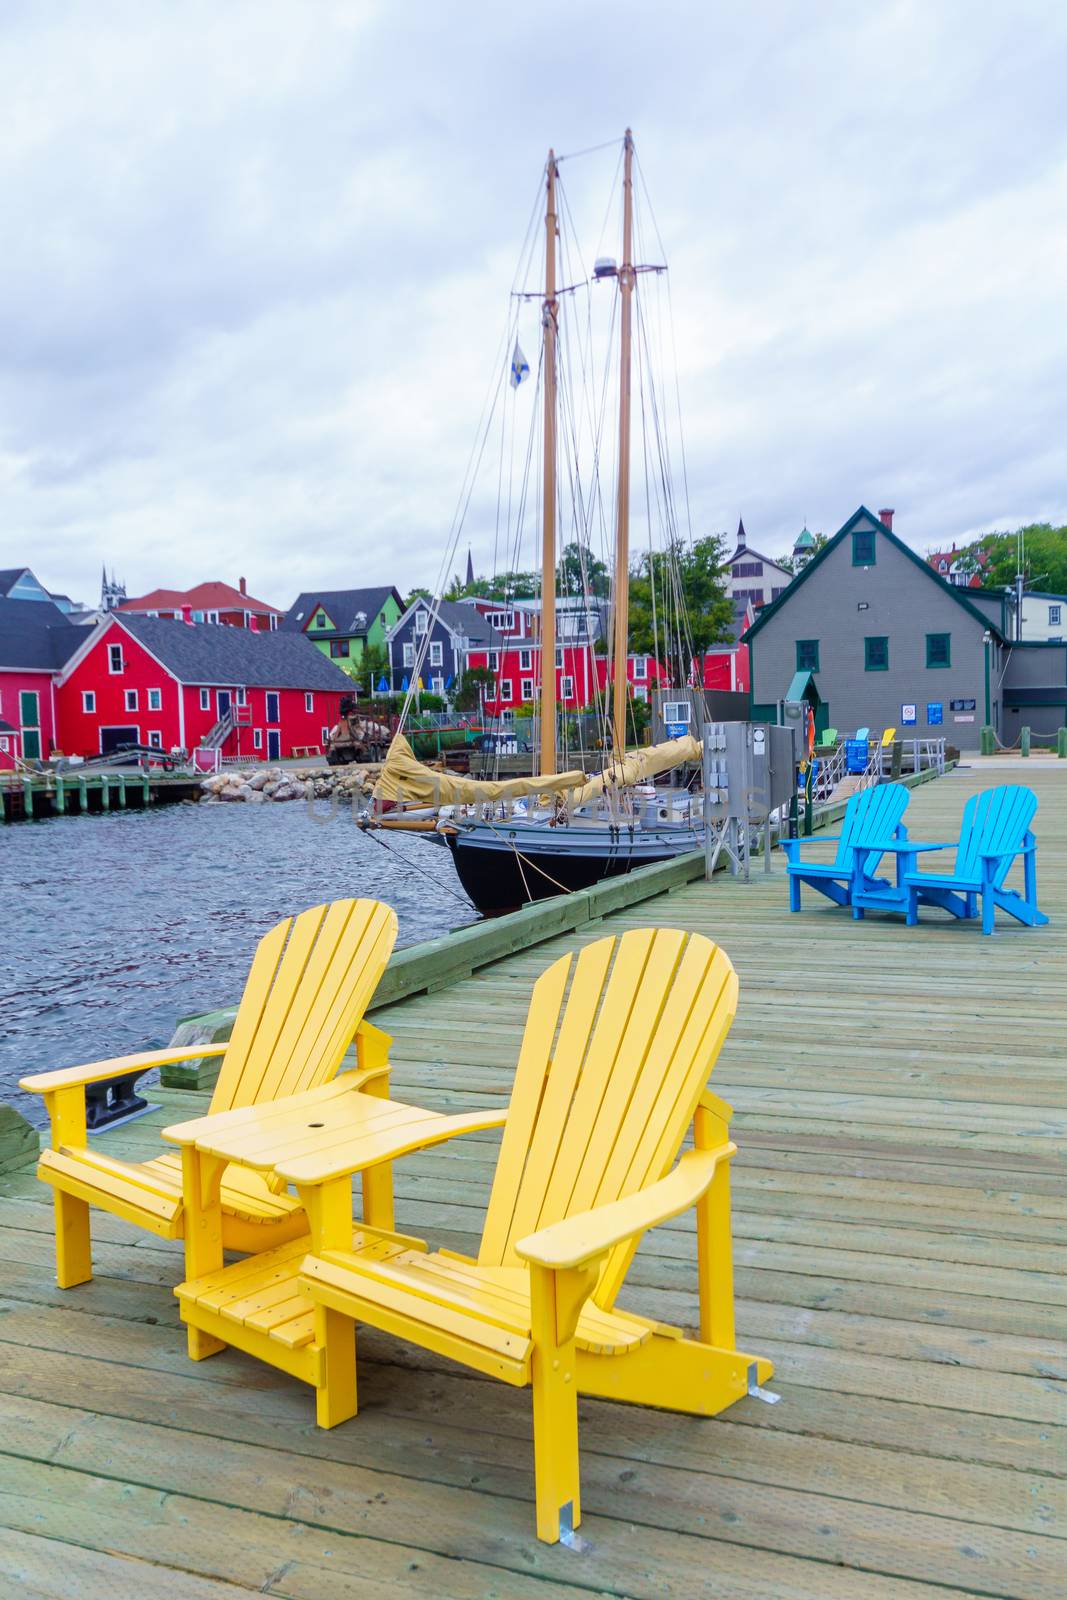 Pier with colorful chairs, in Lunenburg Harbor, Nova Scotia